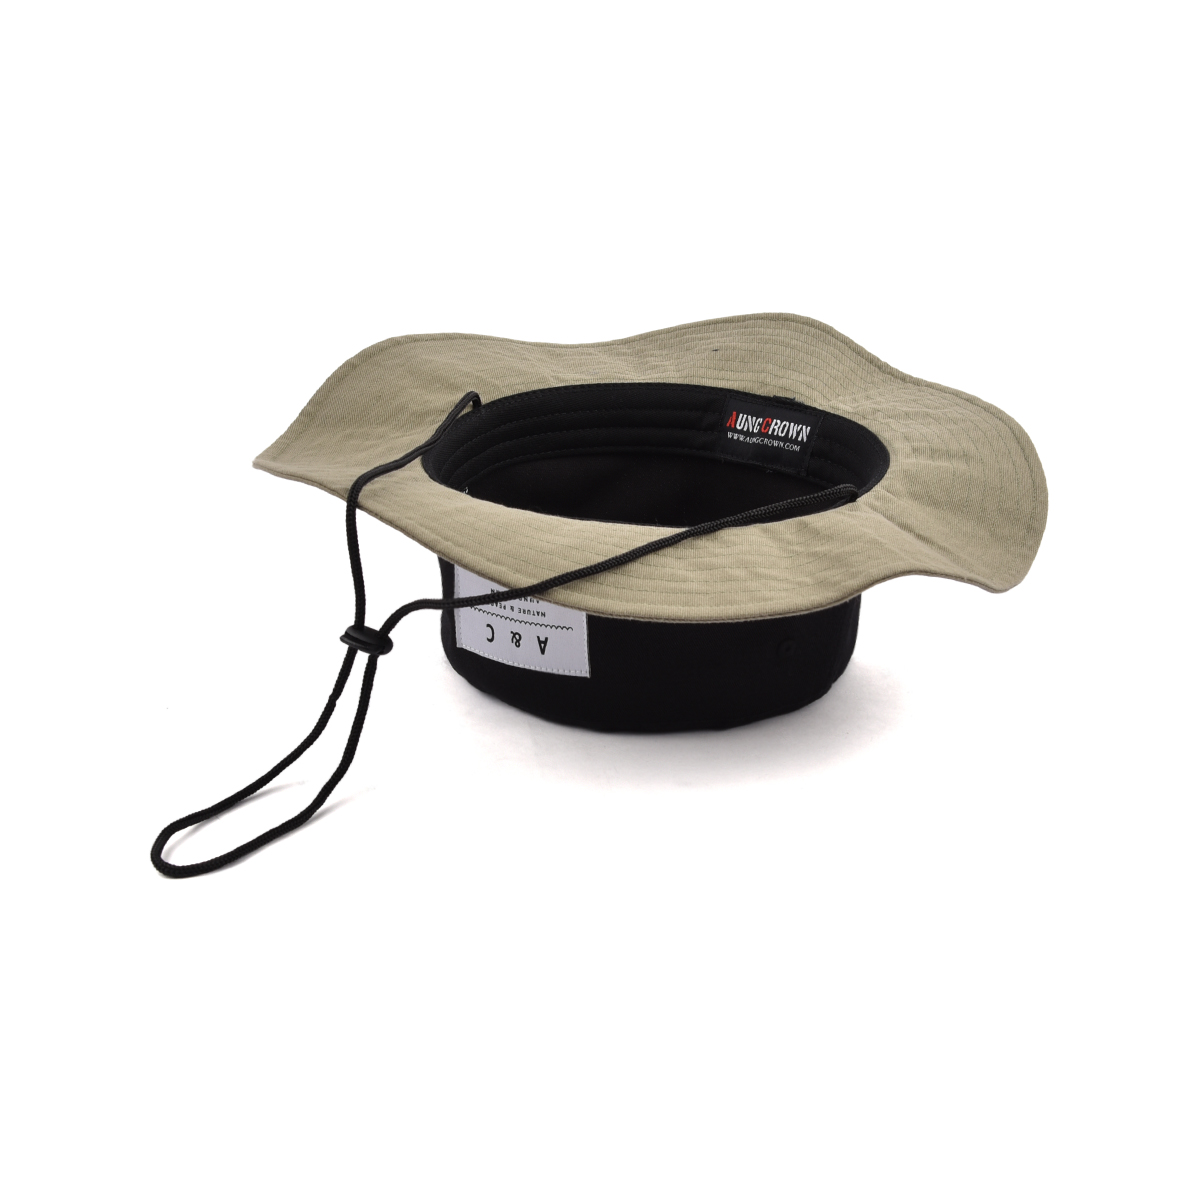 AungCrown water resistant outdoor style wide brim bucket hat